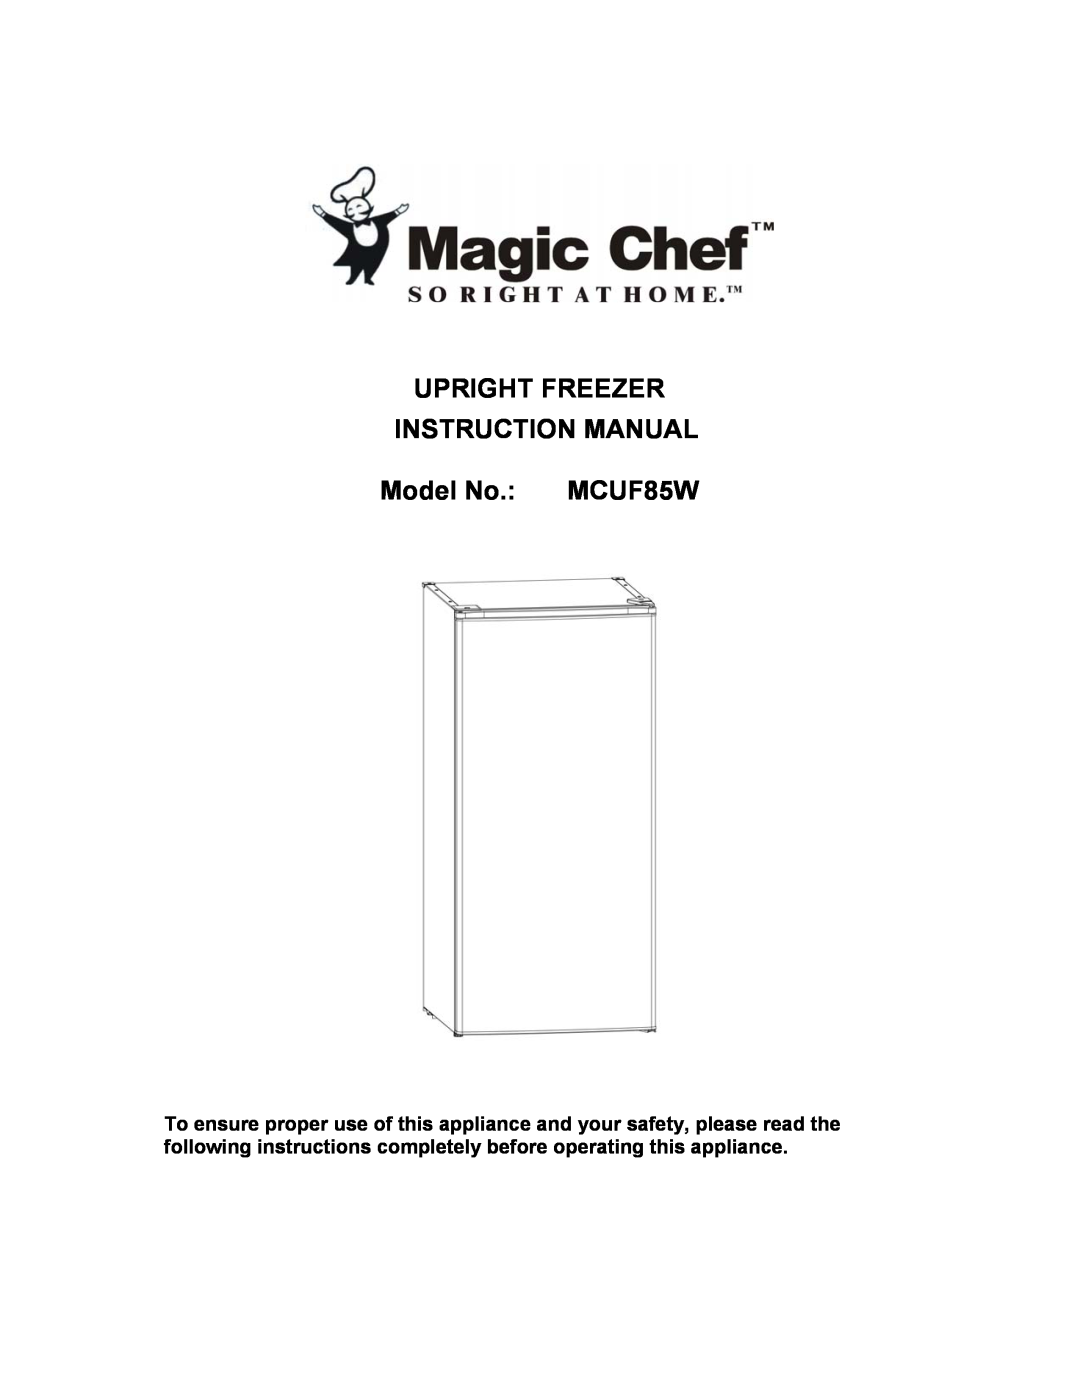 Magic Chef instruction manual Model No. MCUF85W 